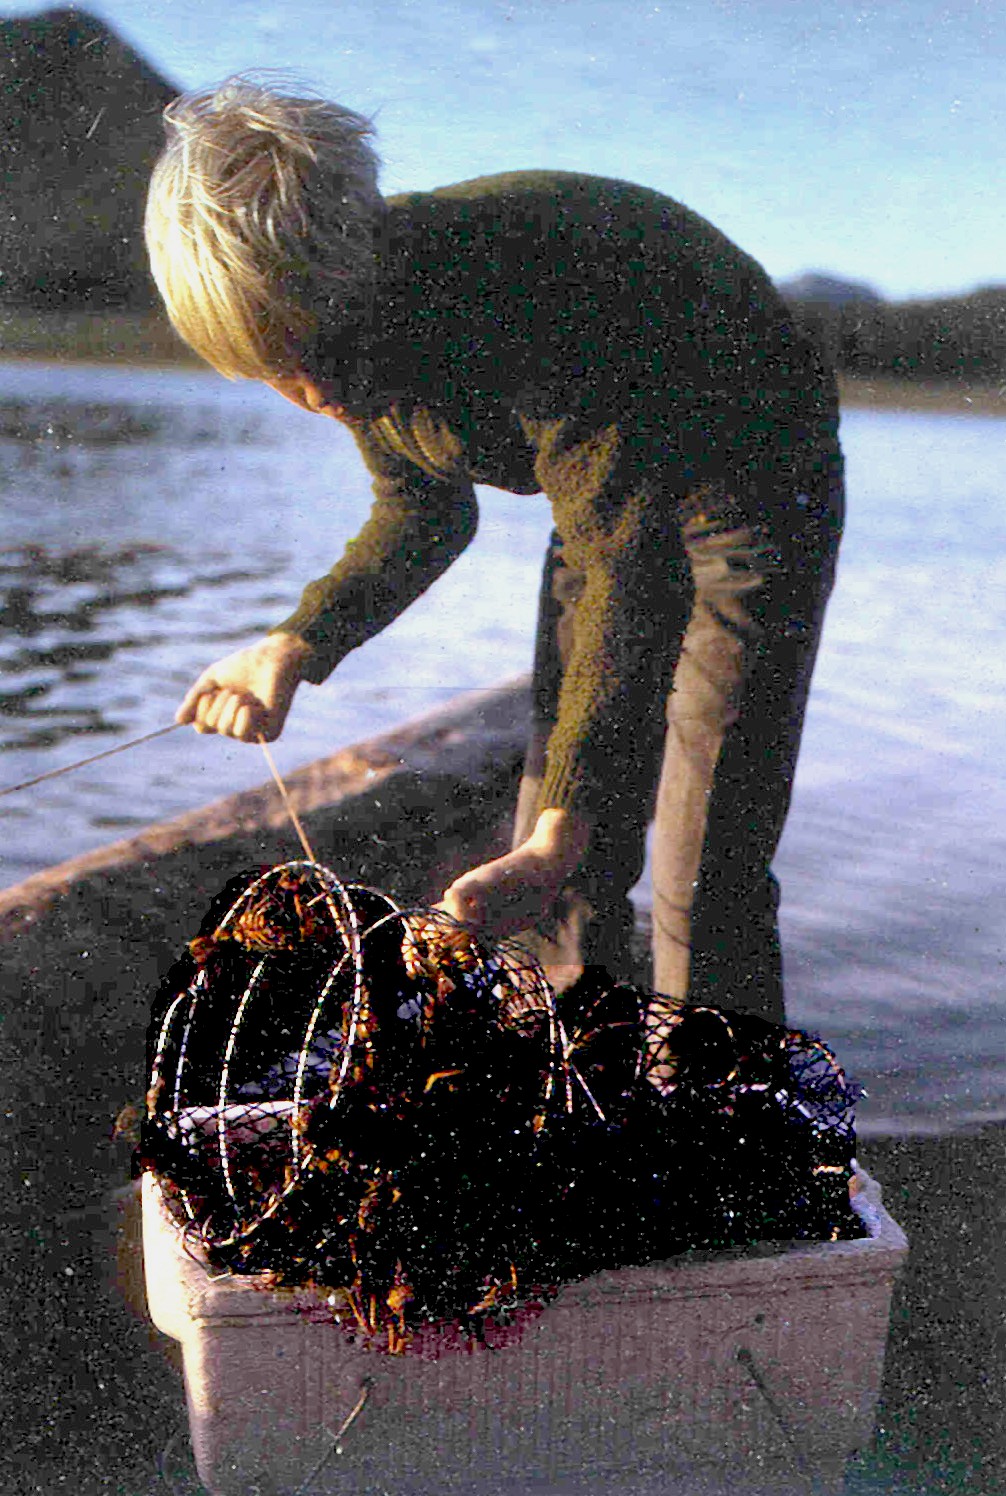 The JACKPOT crayfish trap